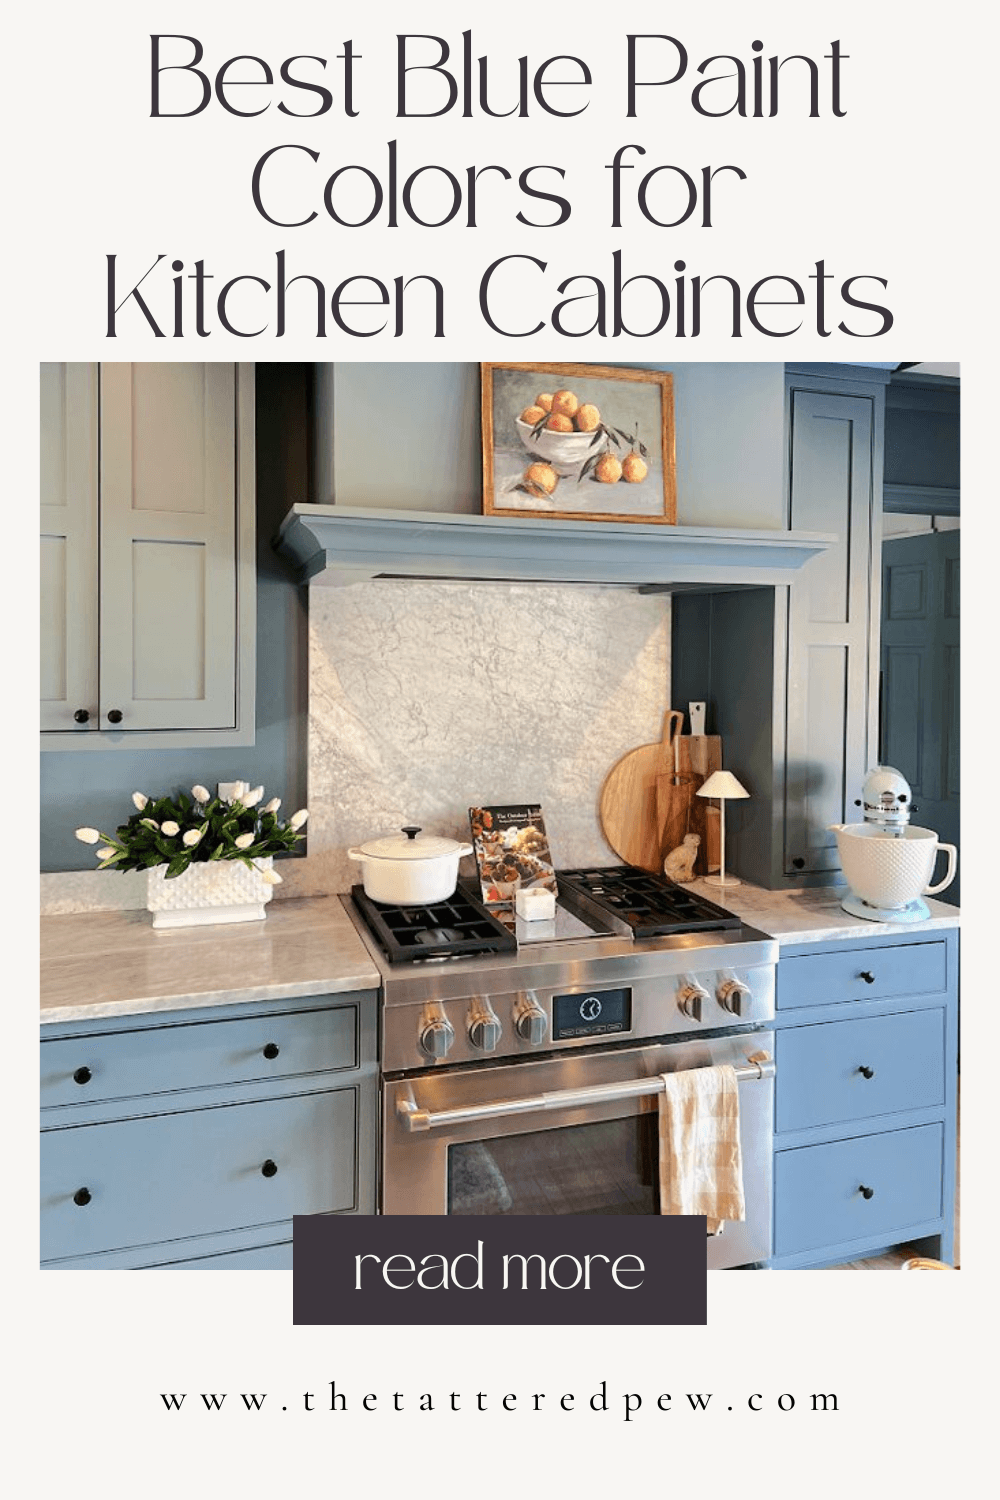 Best Blue Paint Colors for Kitchen Cabinets